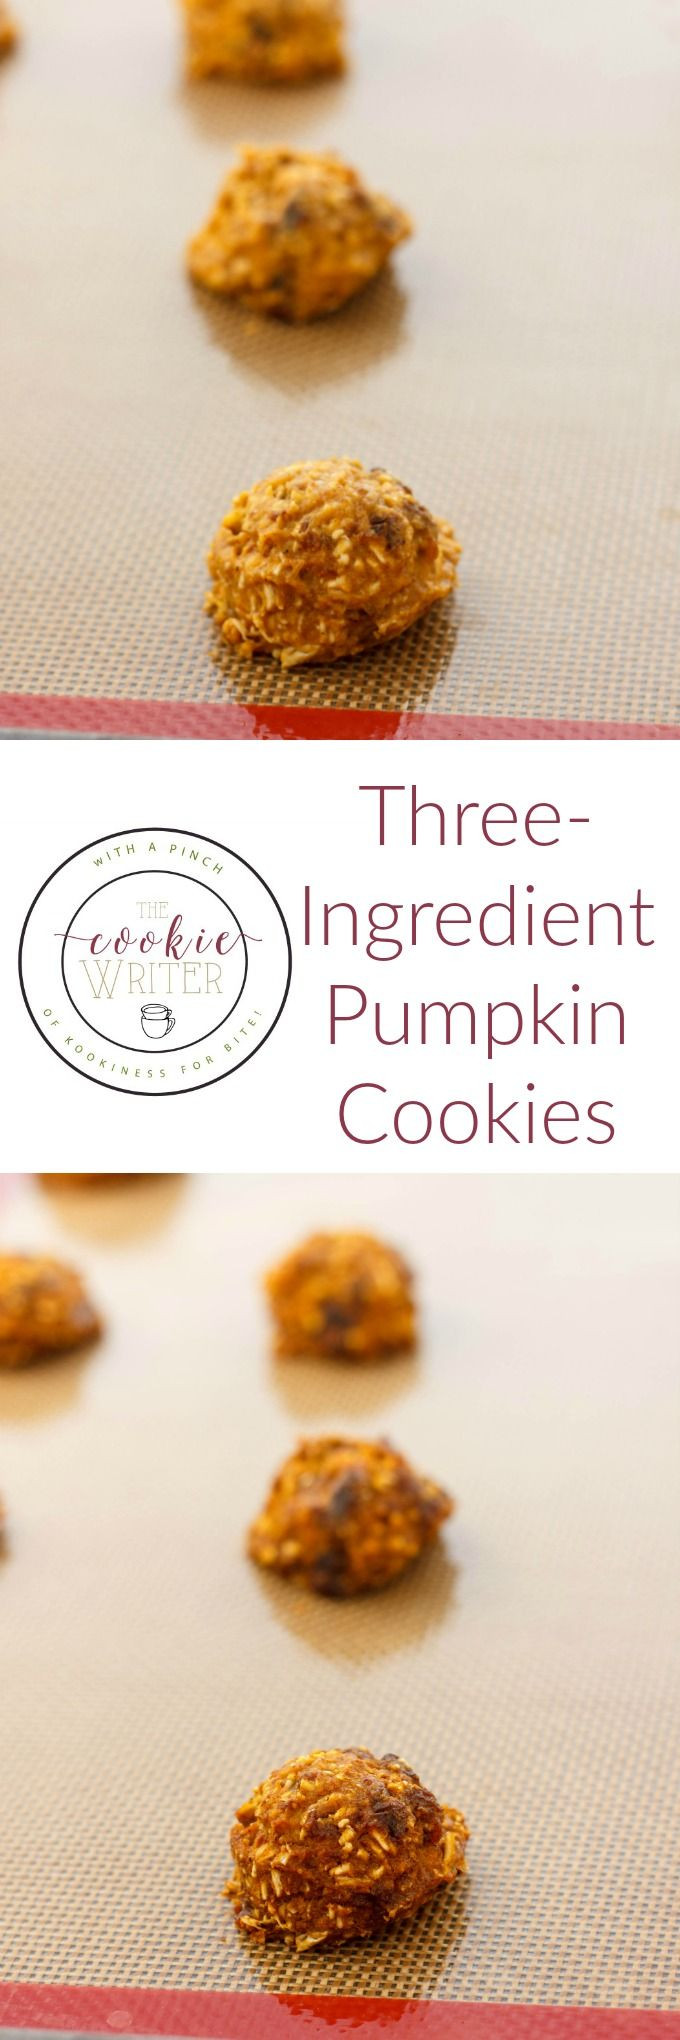 2 Ingredient Pumpkin Cookies
 Two Ingre nt Pumpkin Cookies Recipe